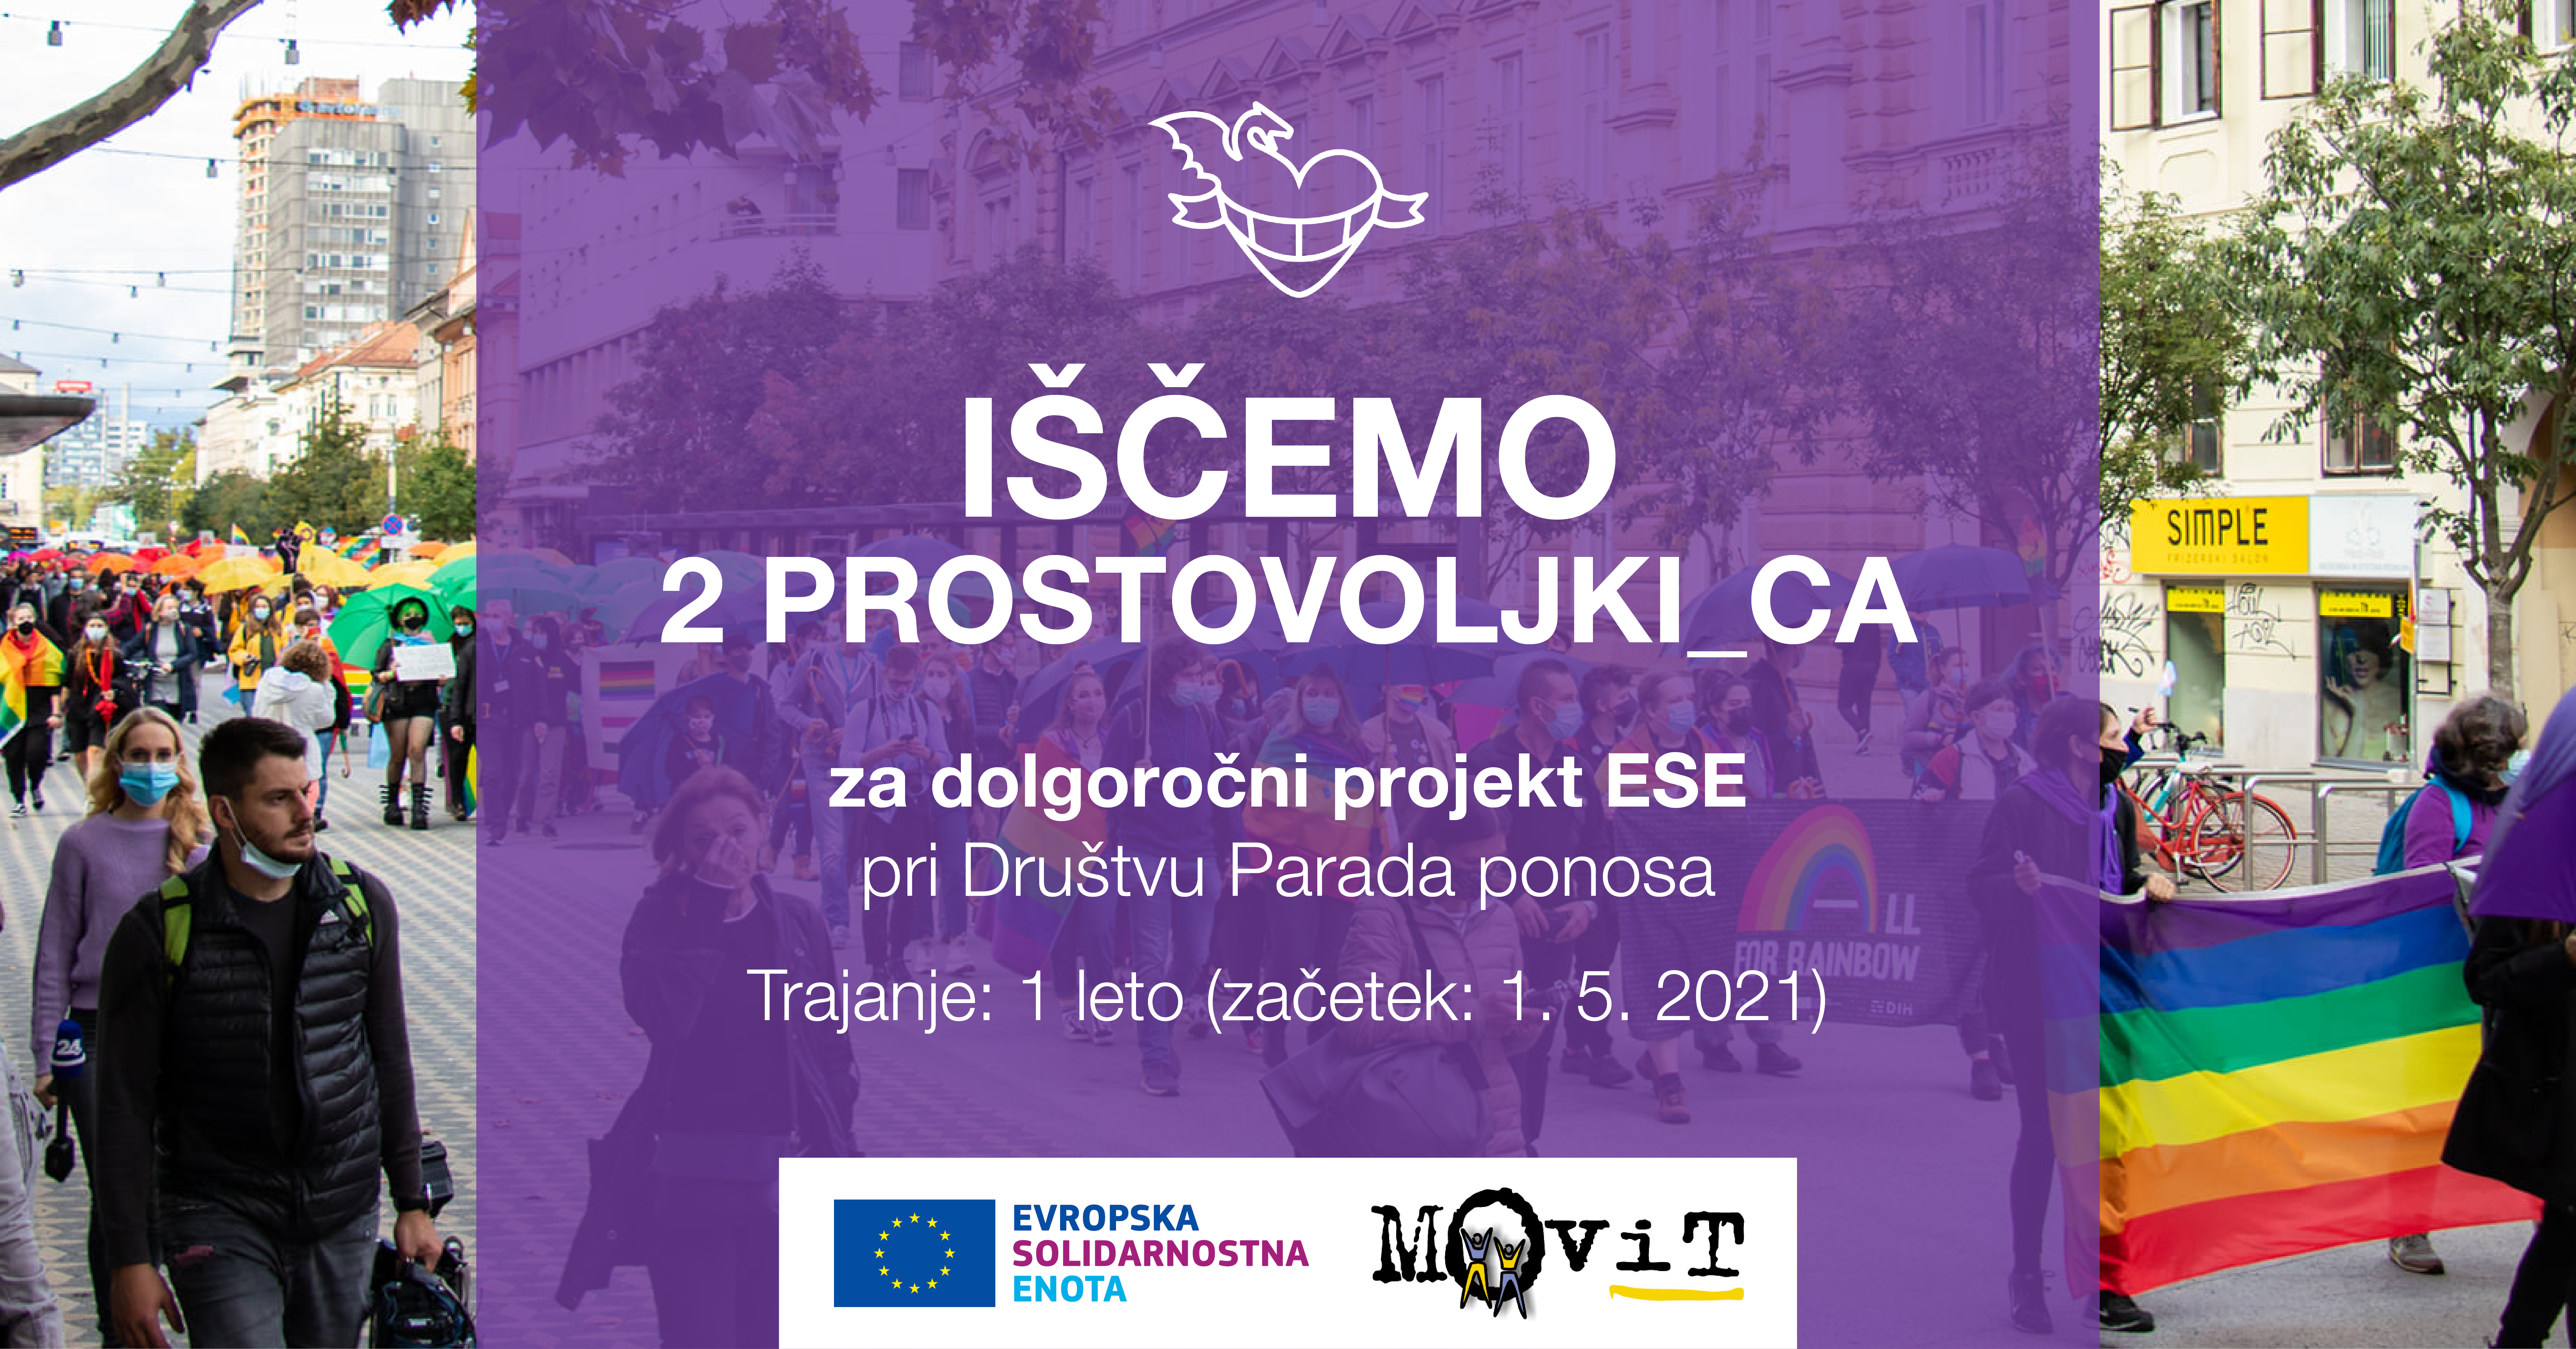 Ljubljana Pride Association Long-term volunteering project call